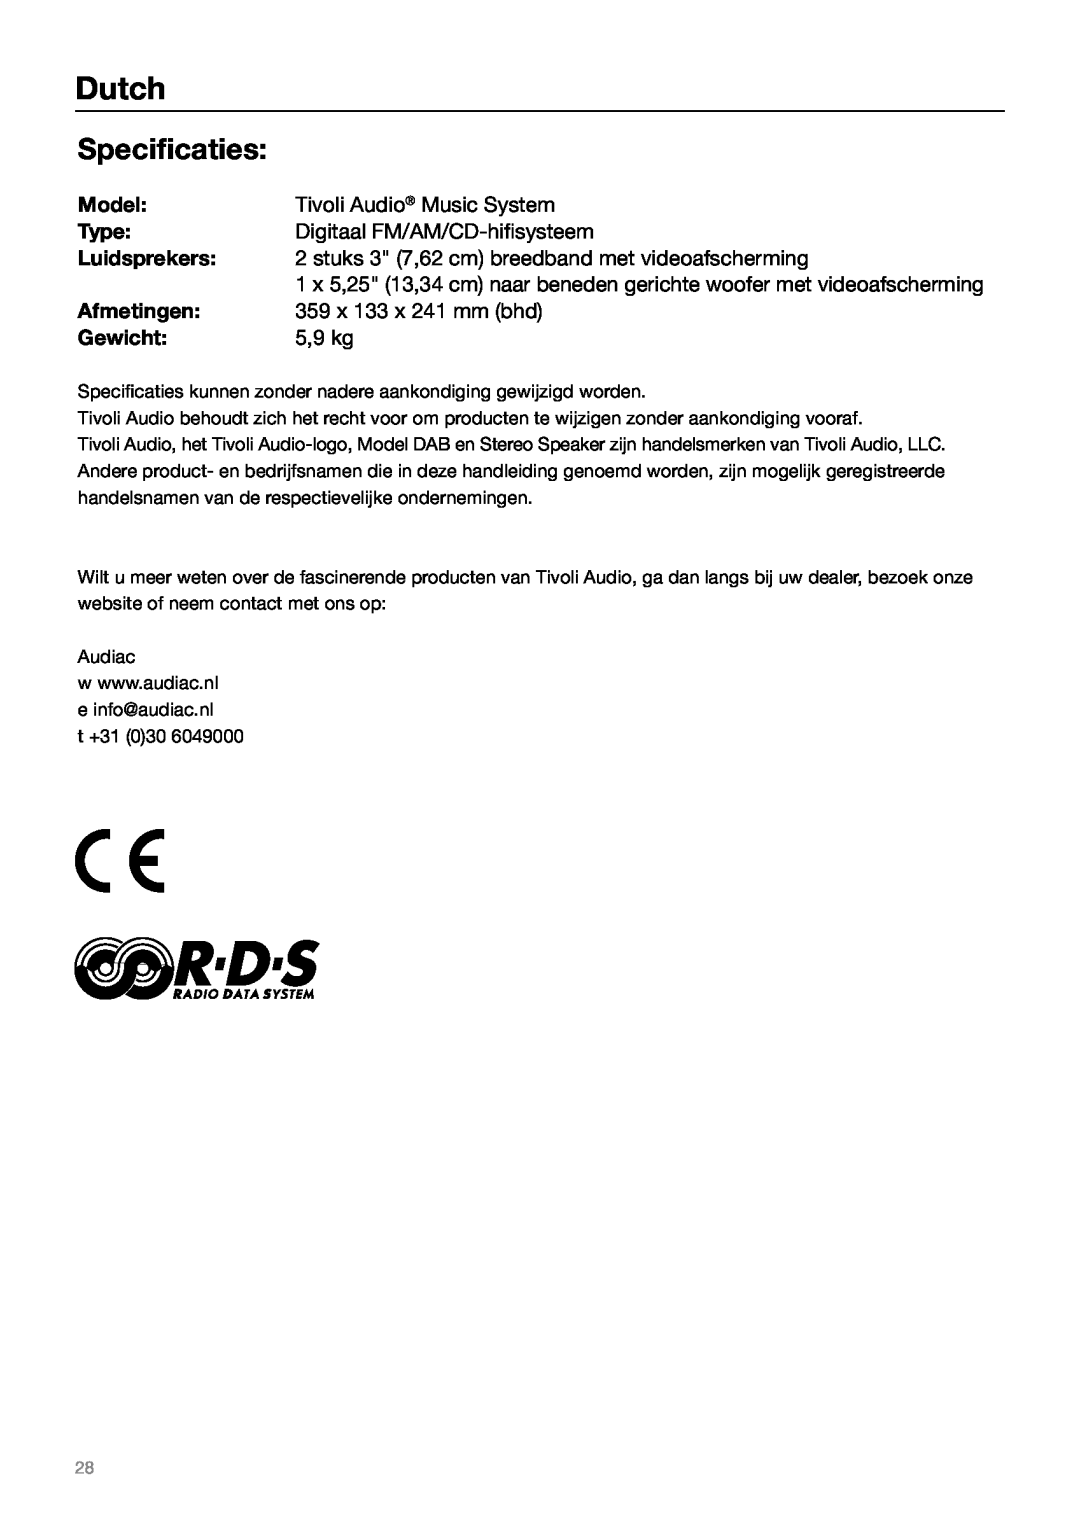 Tivoli Audio MUSIC SYSTEM owner manual Specificaties, Gewicht, 5,9 kg, Dutch 